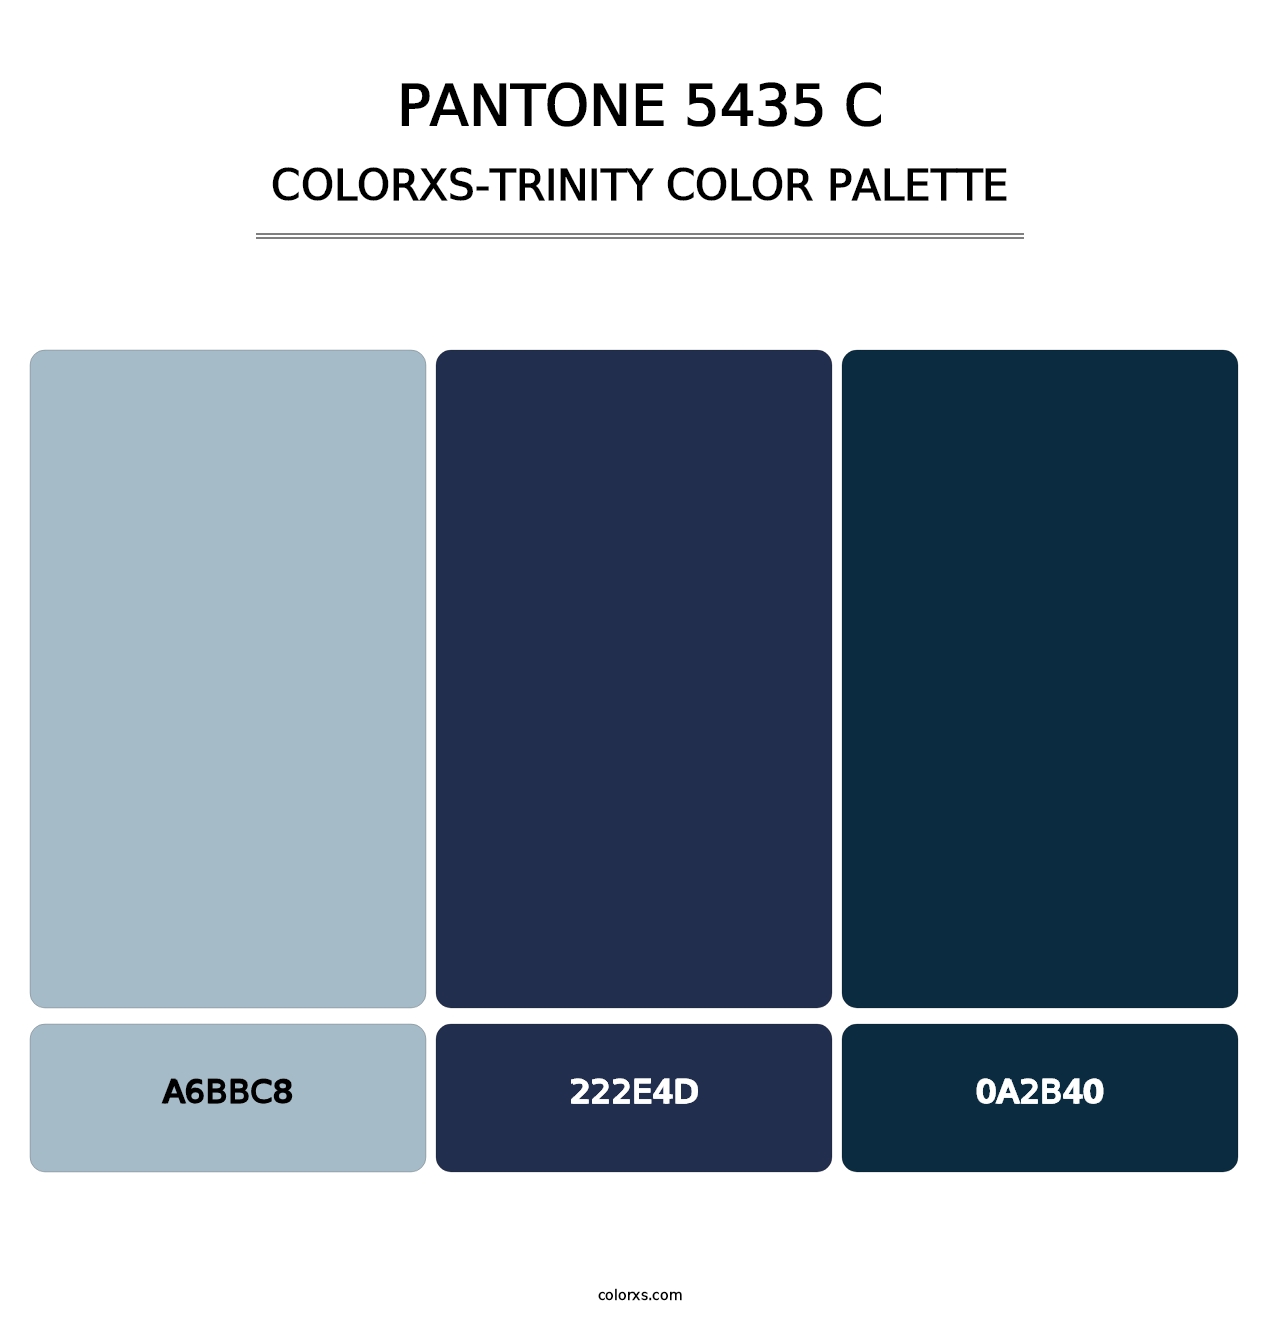 PANTONE 5435 C - Colorxs Trinity Palette